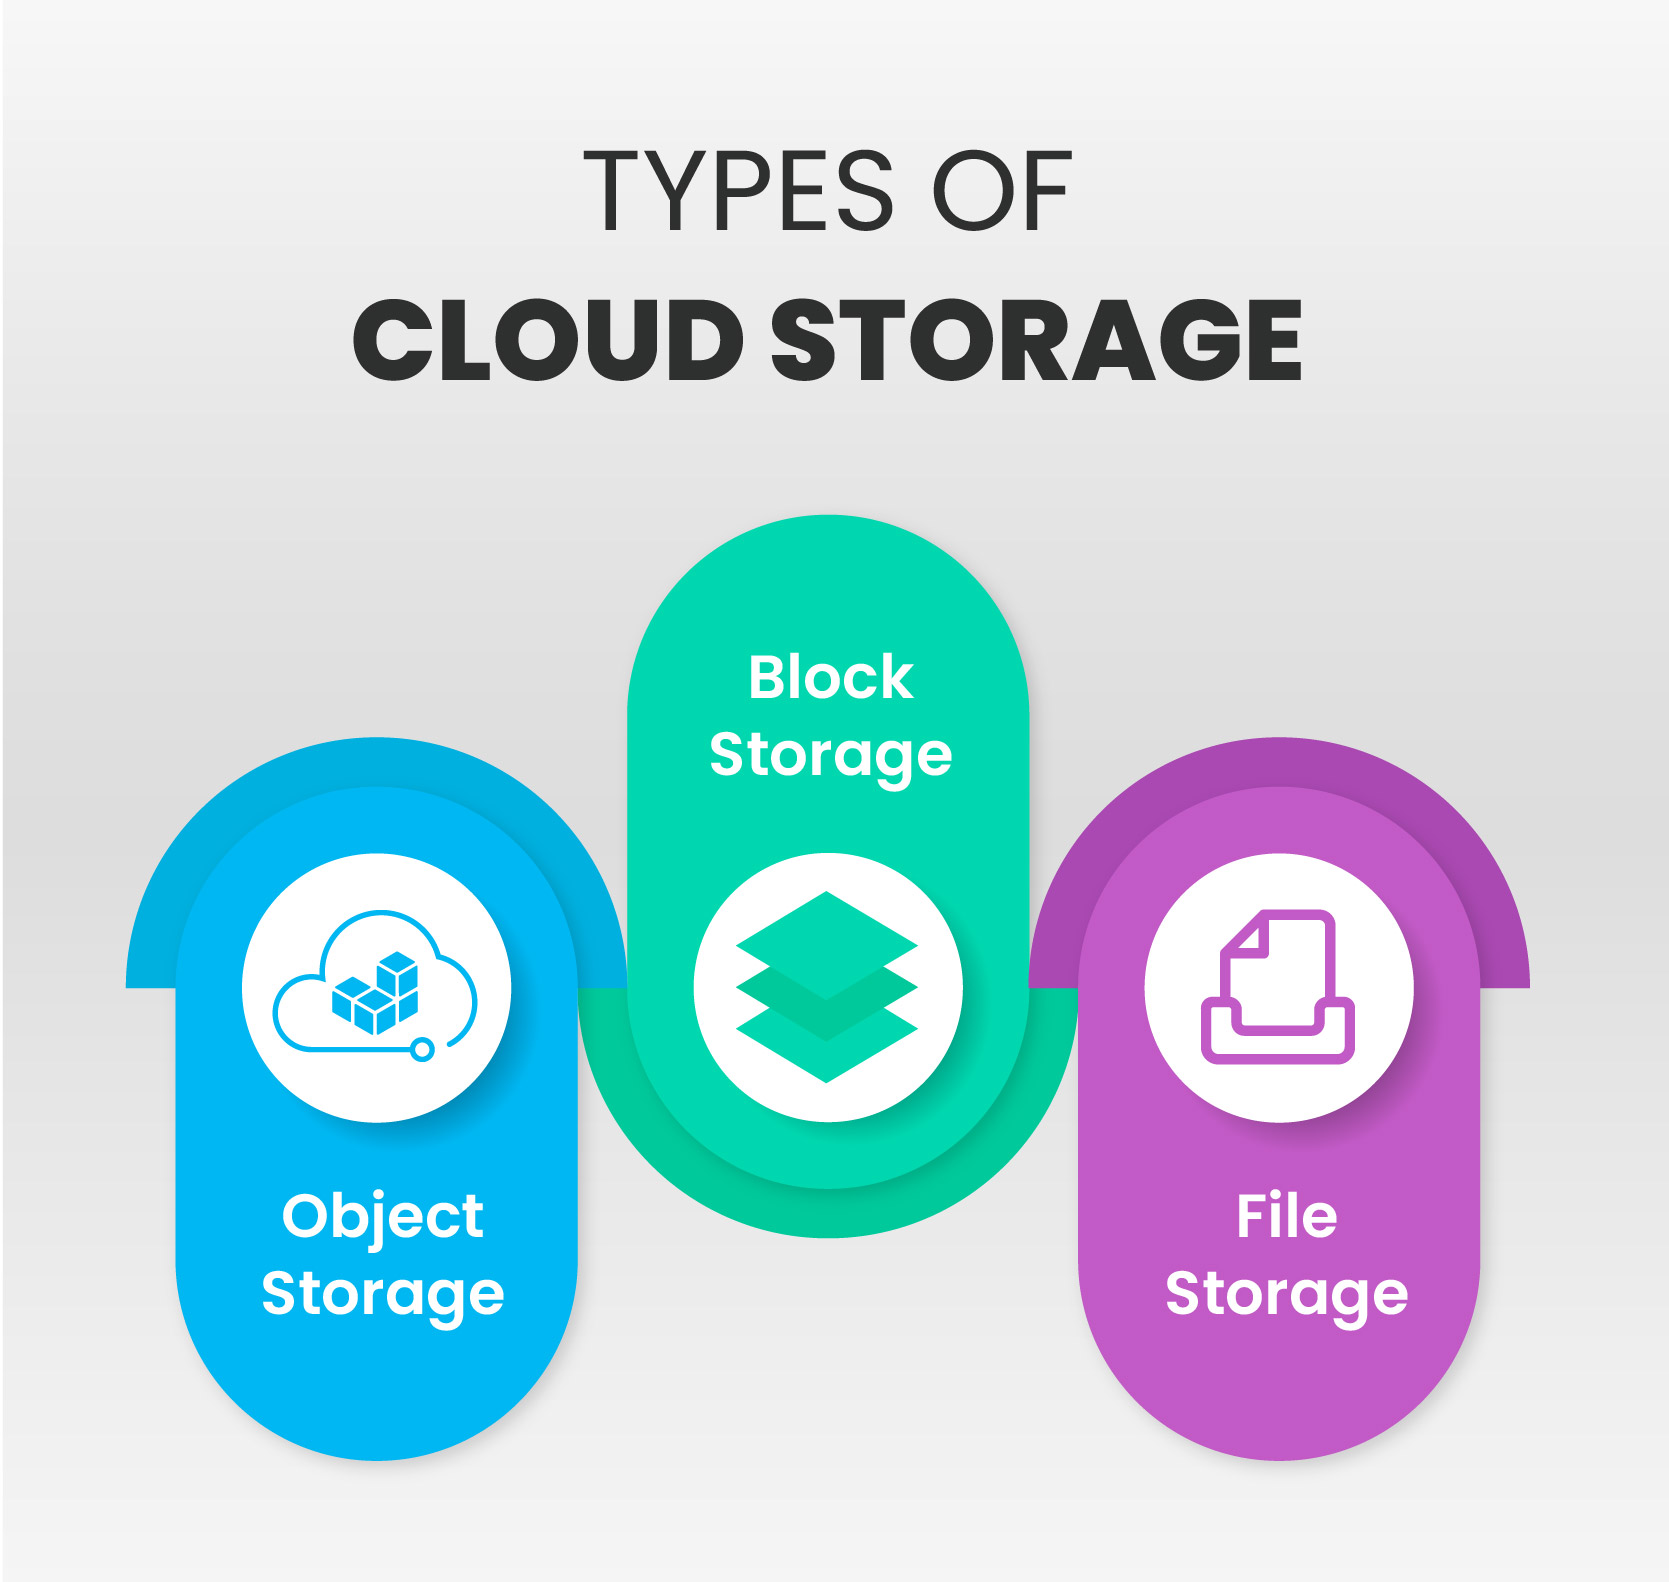 Types of Cloud Storage